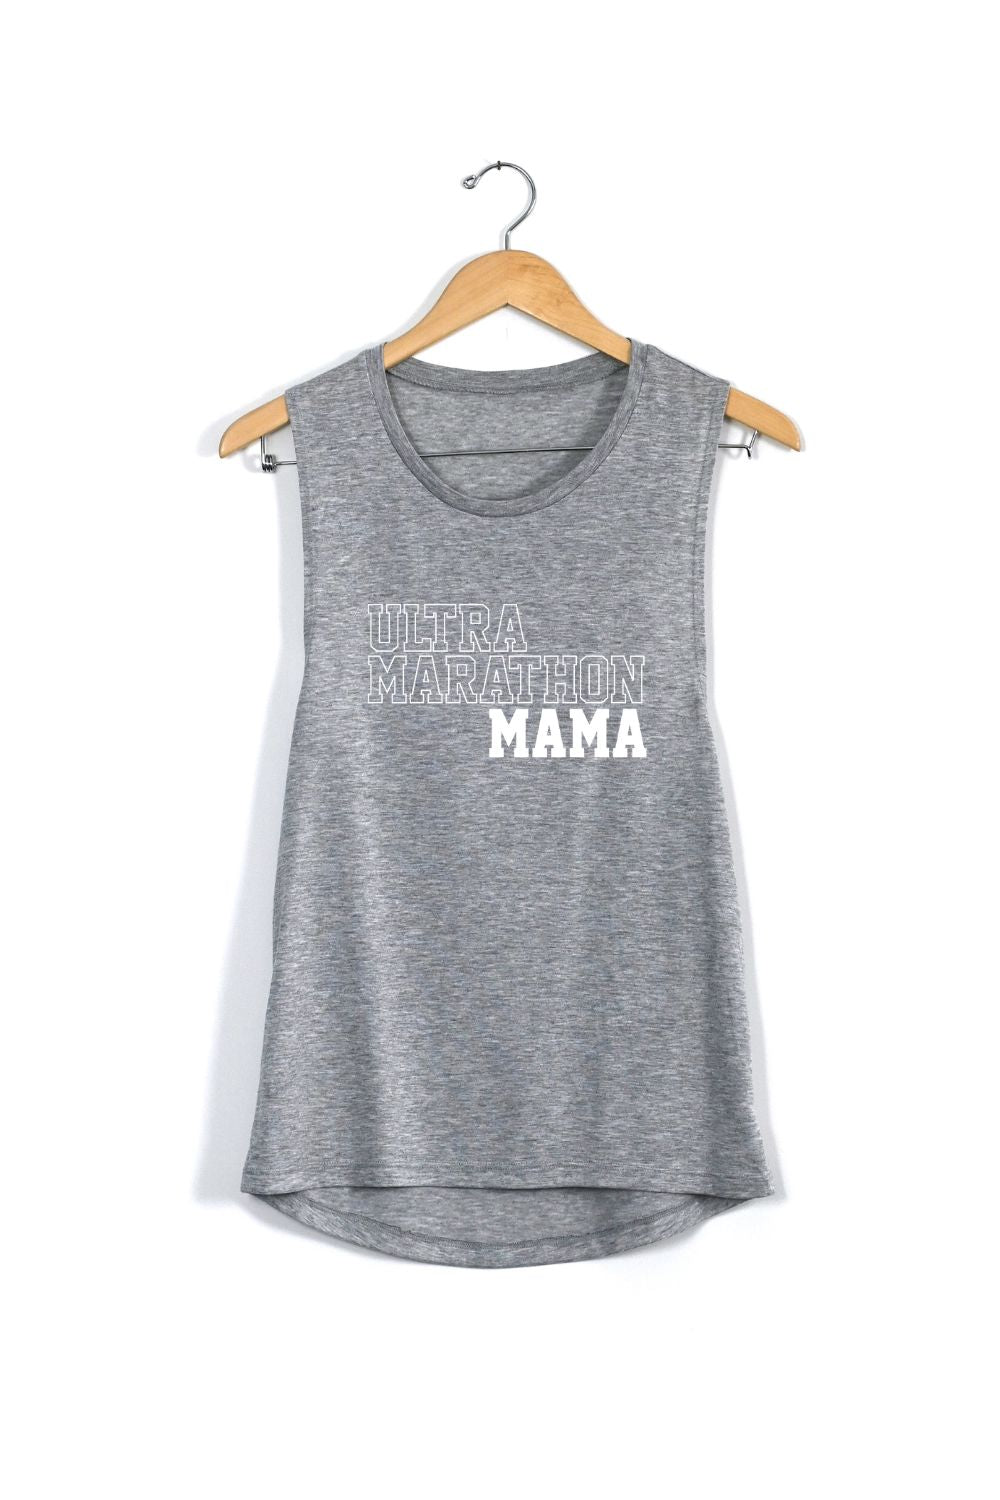 Ultramarathon Mama Muscle Tank